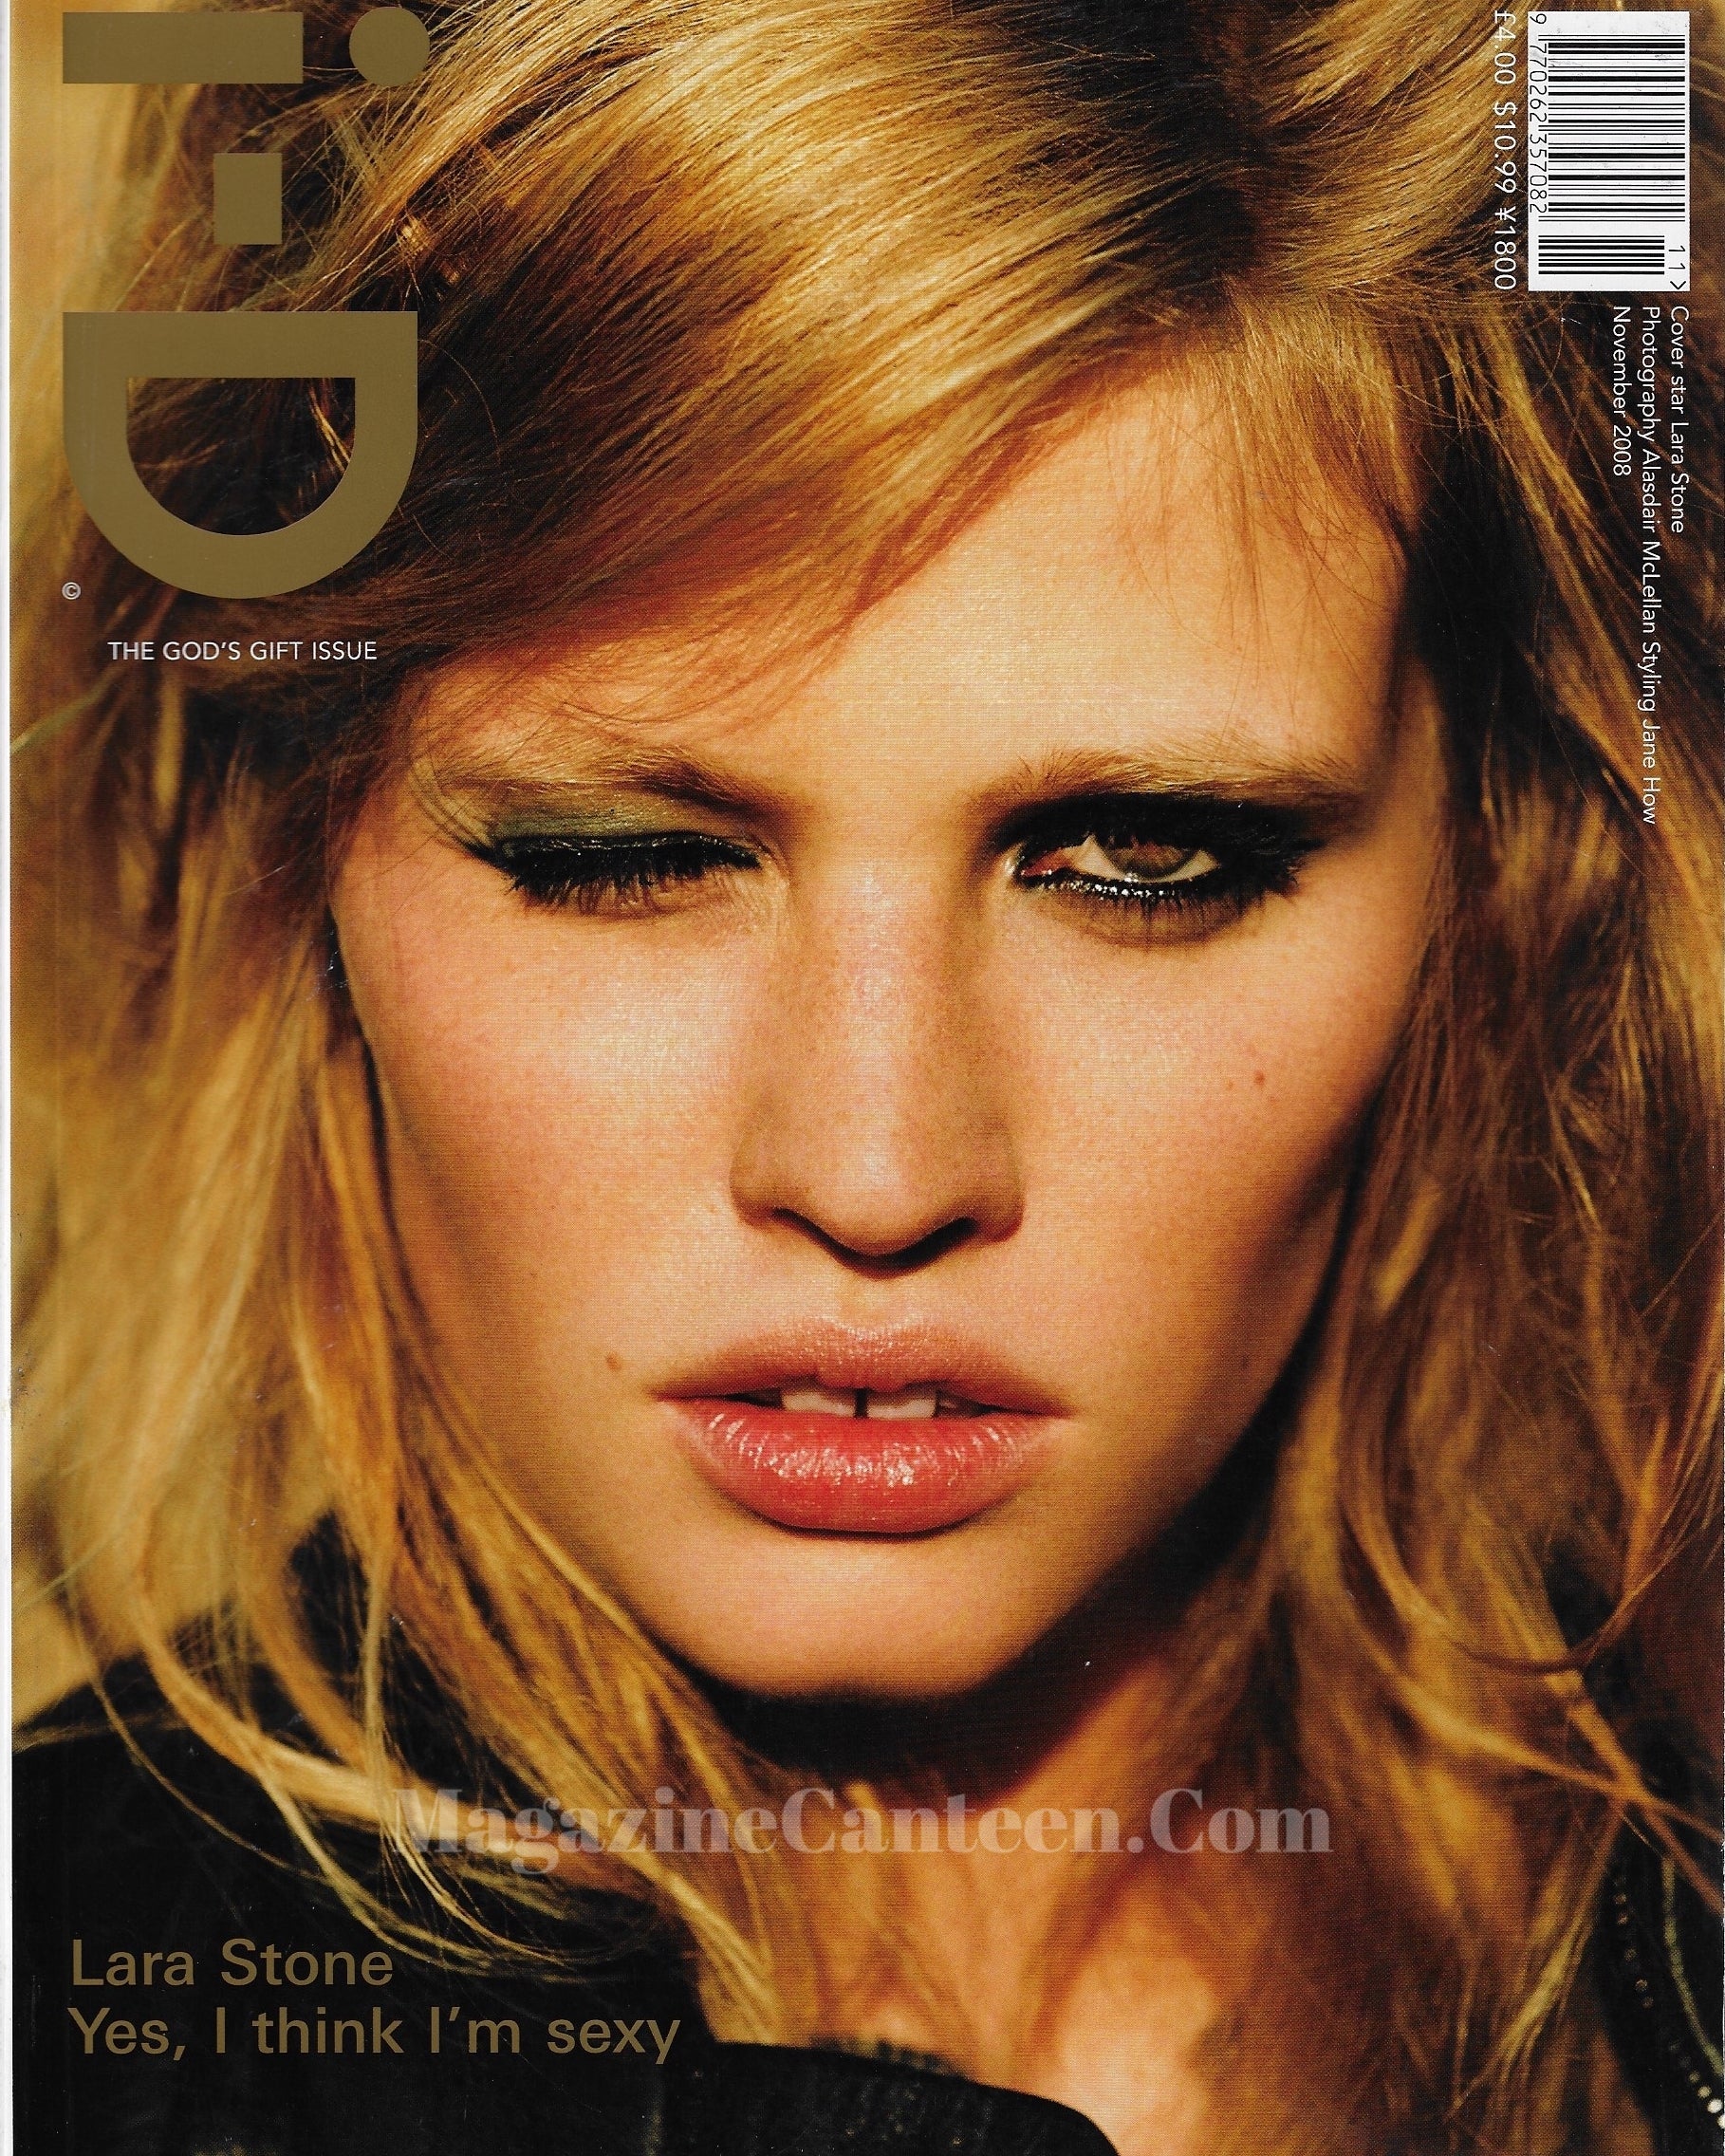 I-D Magazine 293 - Lara Stone 2008